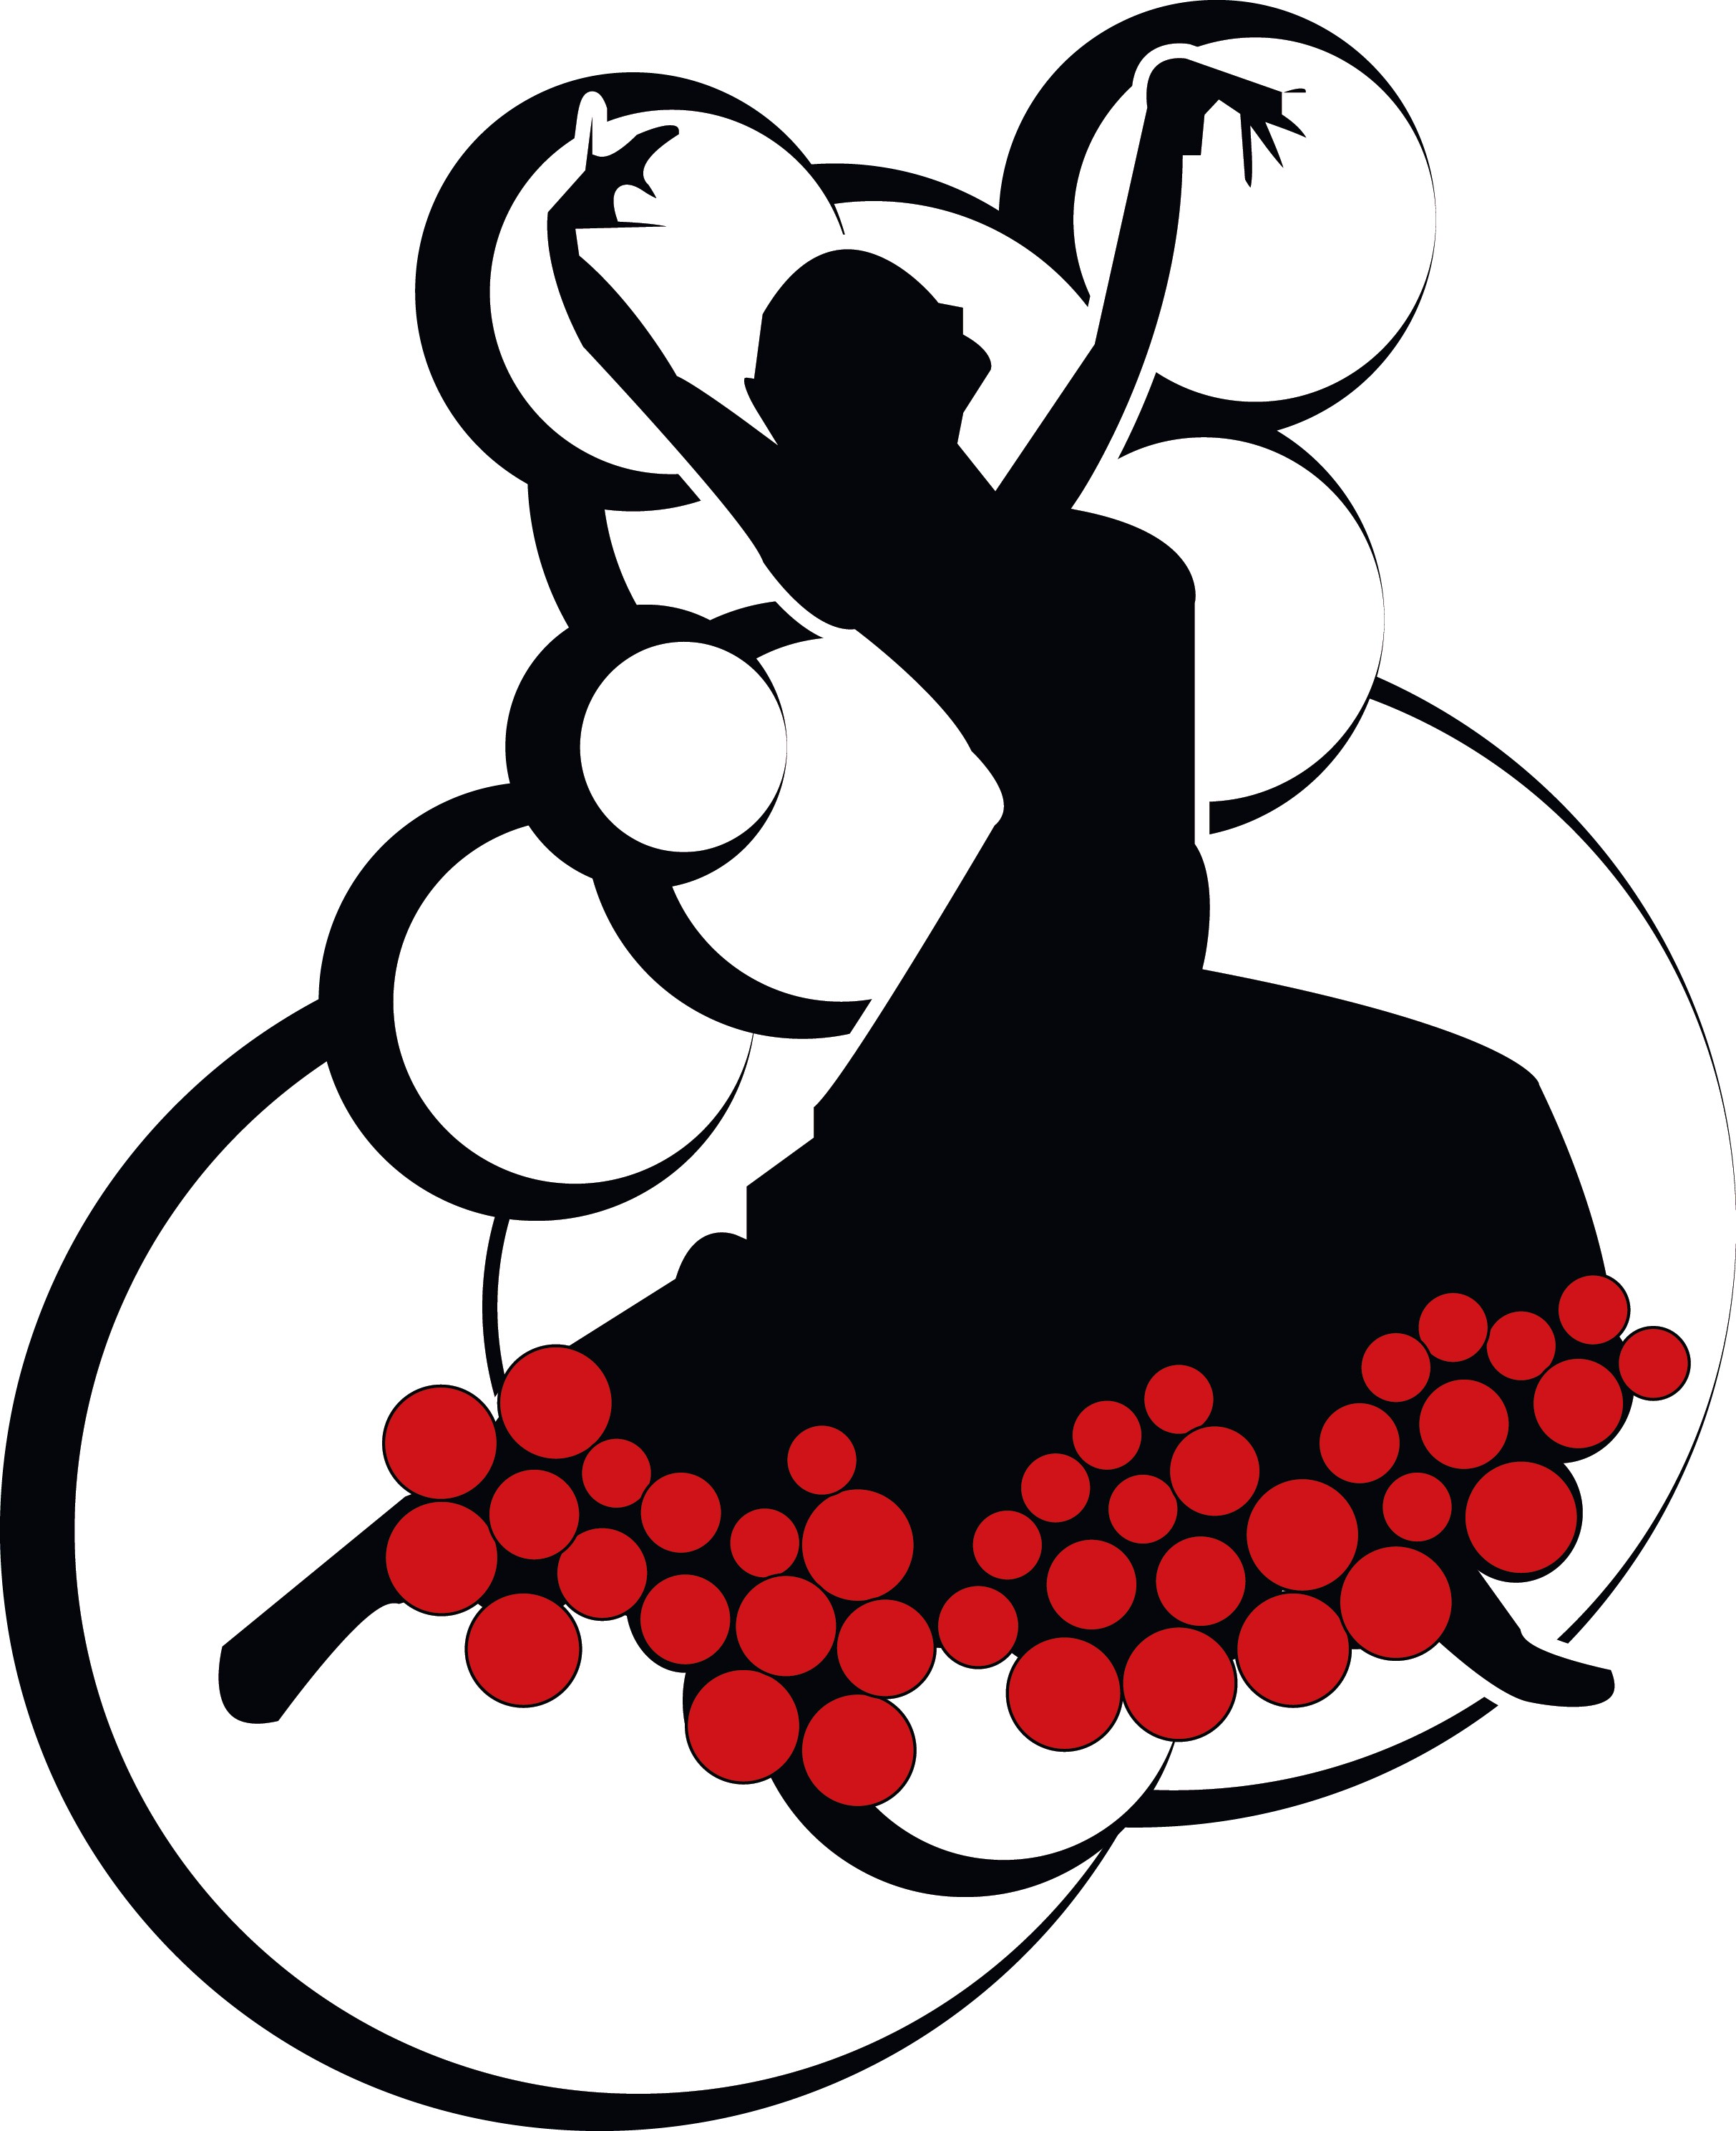 Flamenco Dancer Silhouette Flamenco 2 By Gstastny